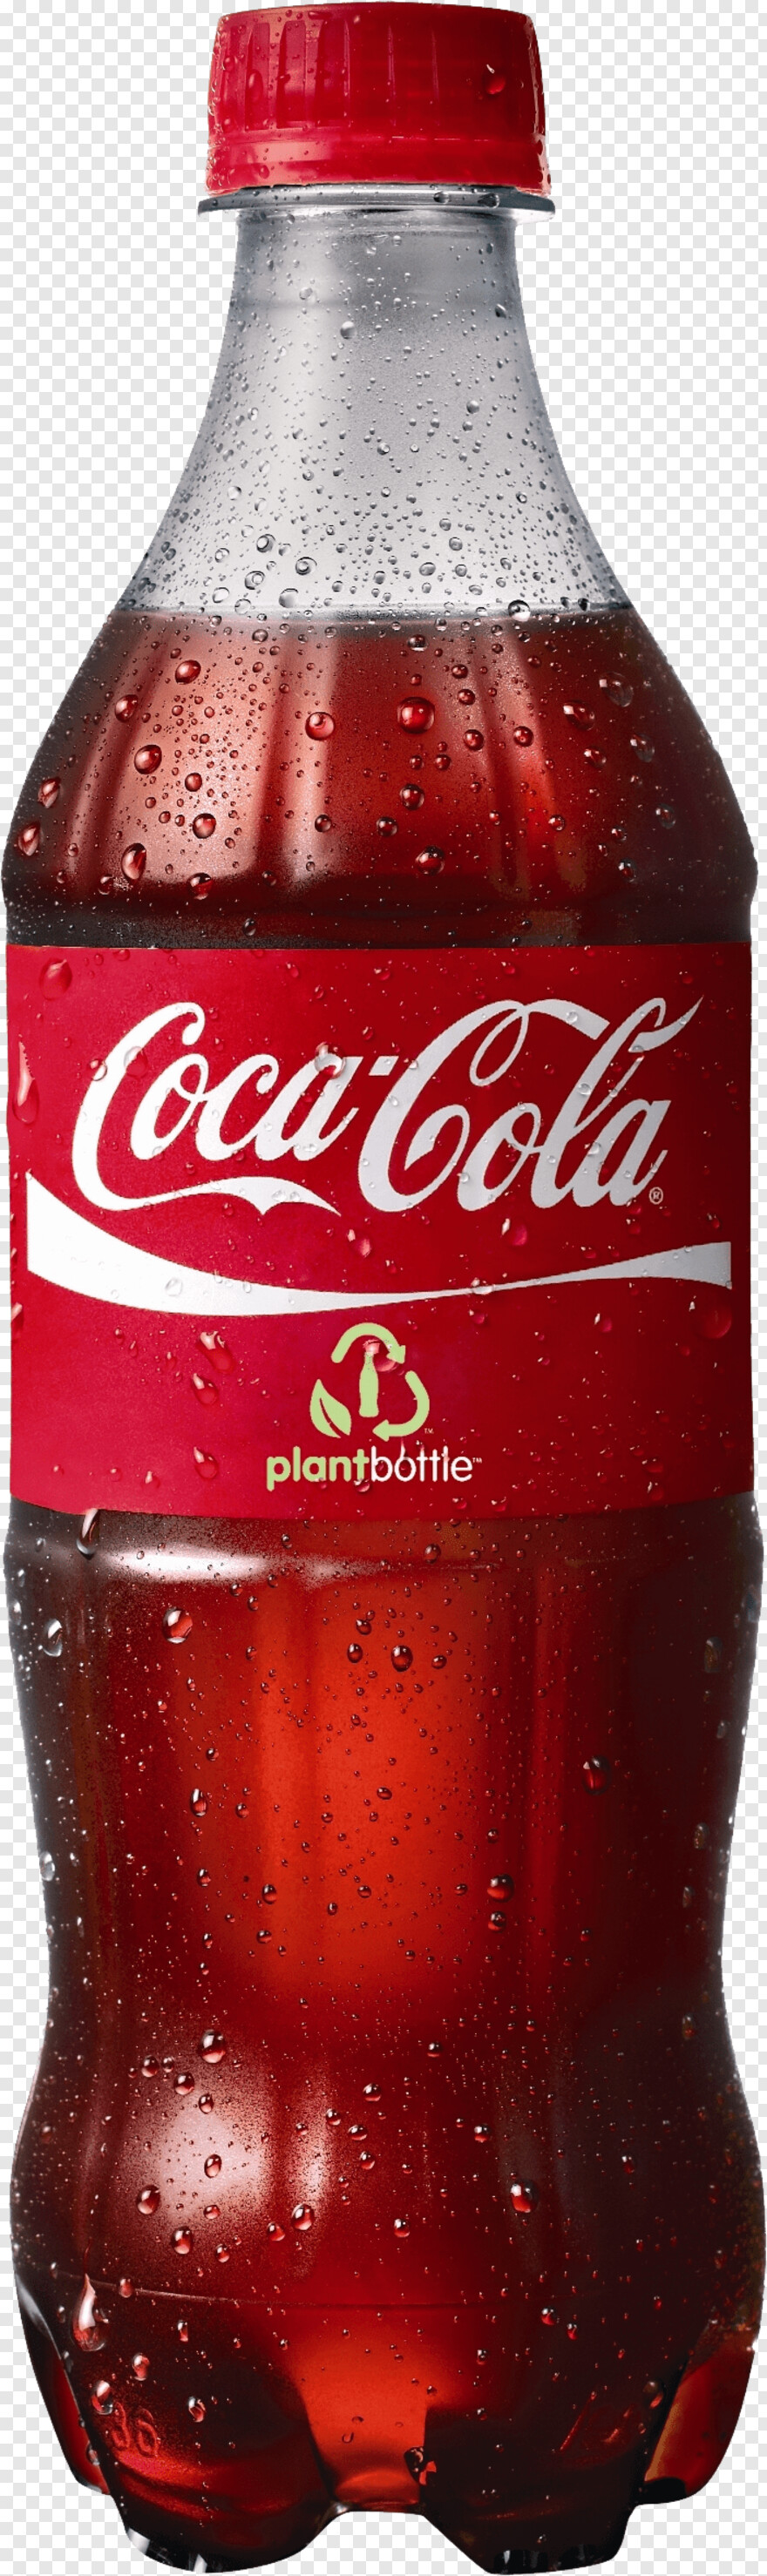  Coca Cola Bottle, Download Button, Coca Cola Logo, Coca Cola, Cocacola, Coca Cola Can